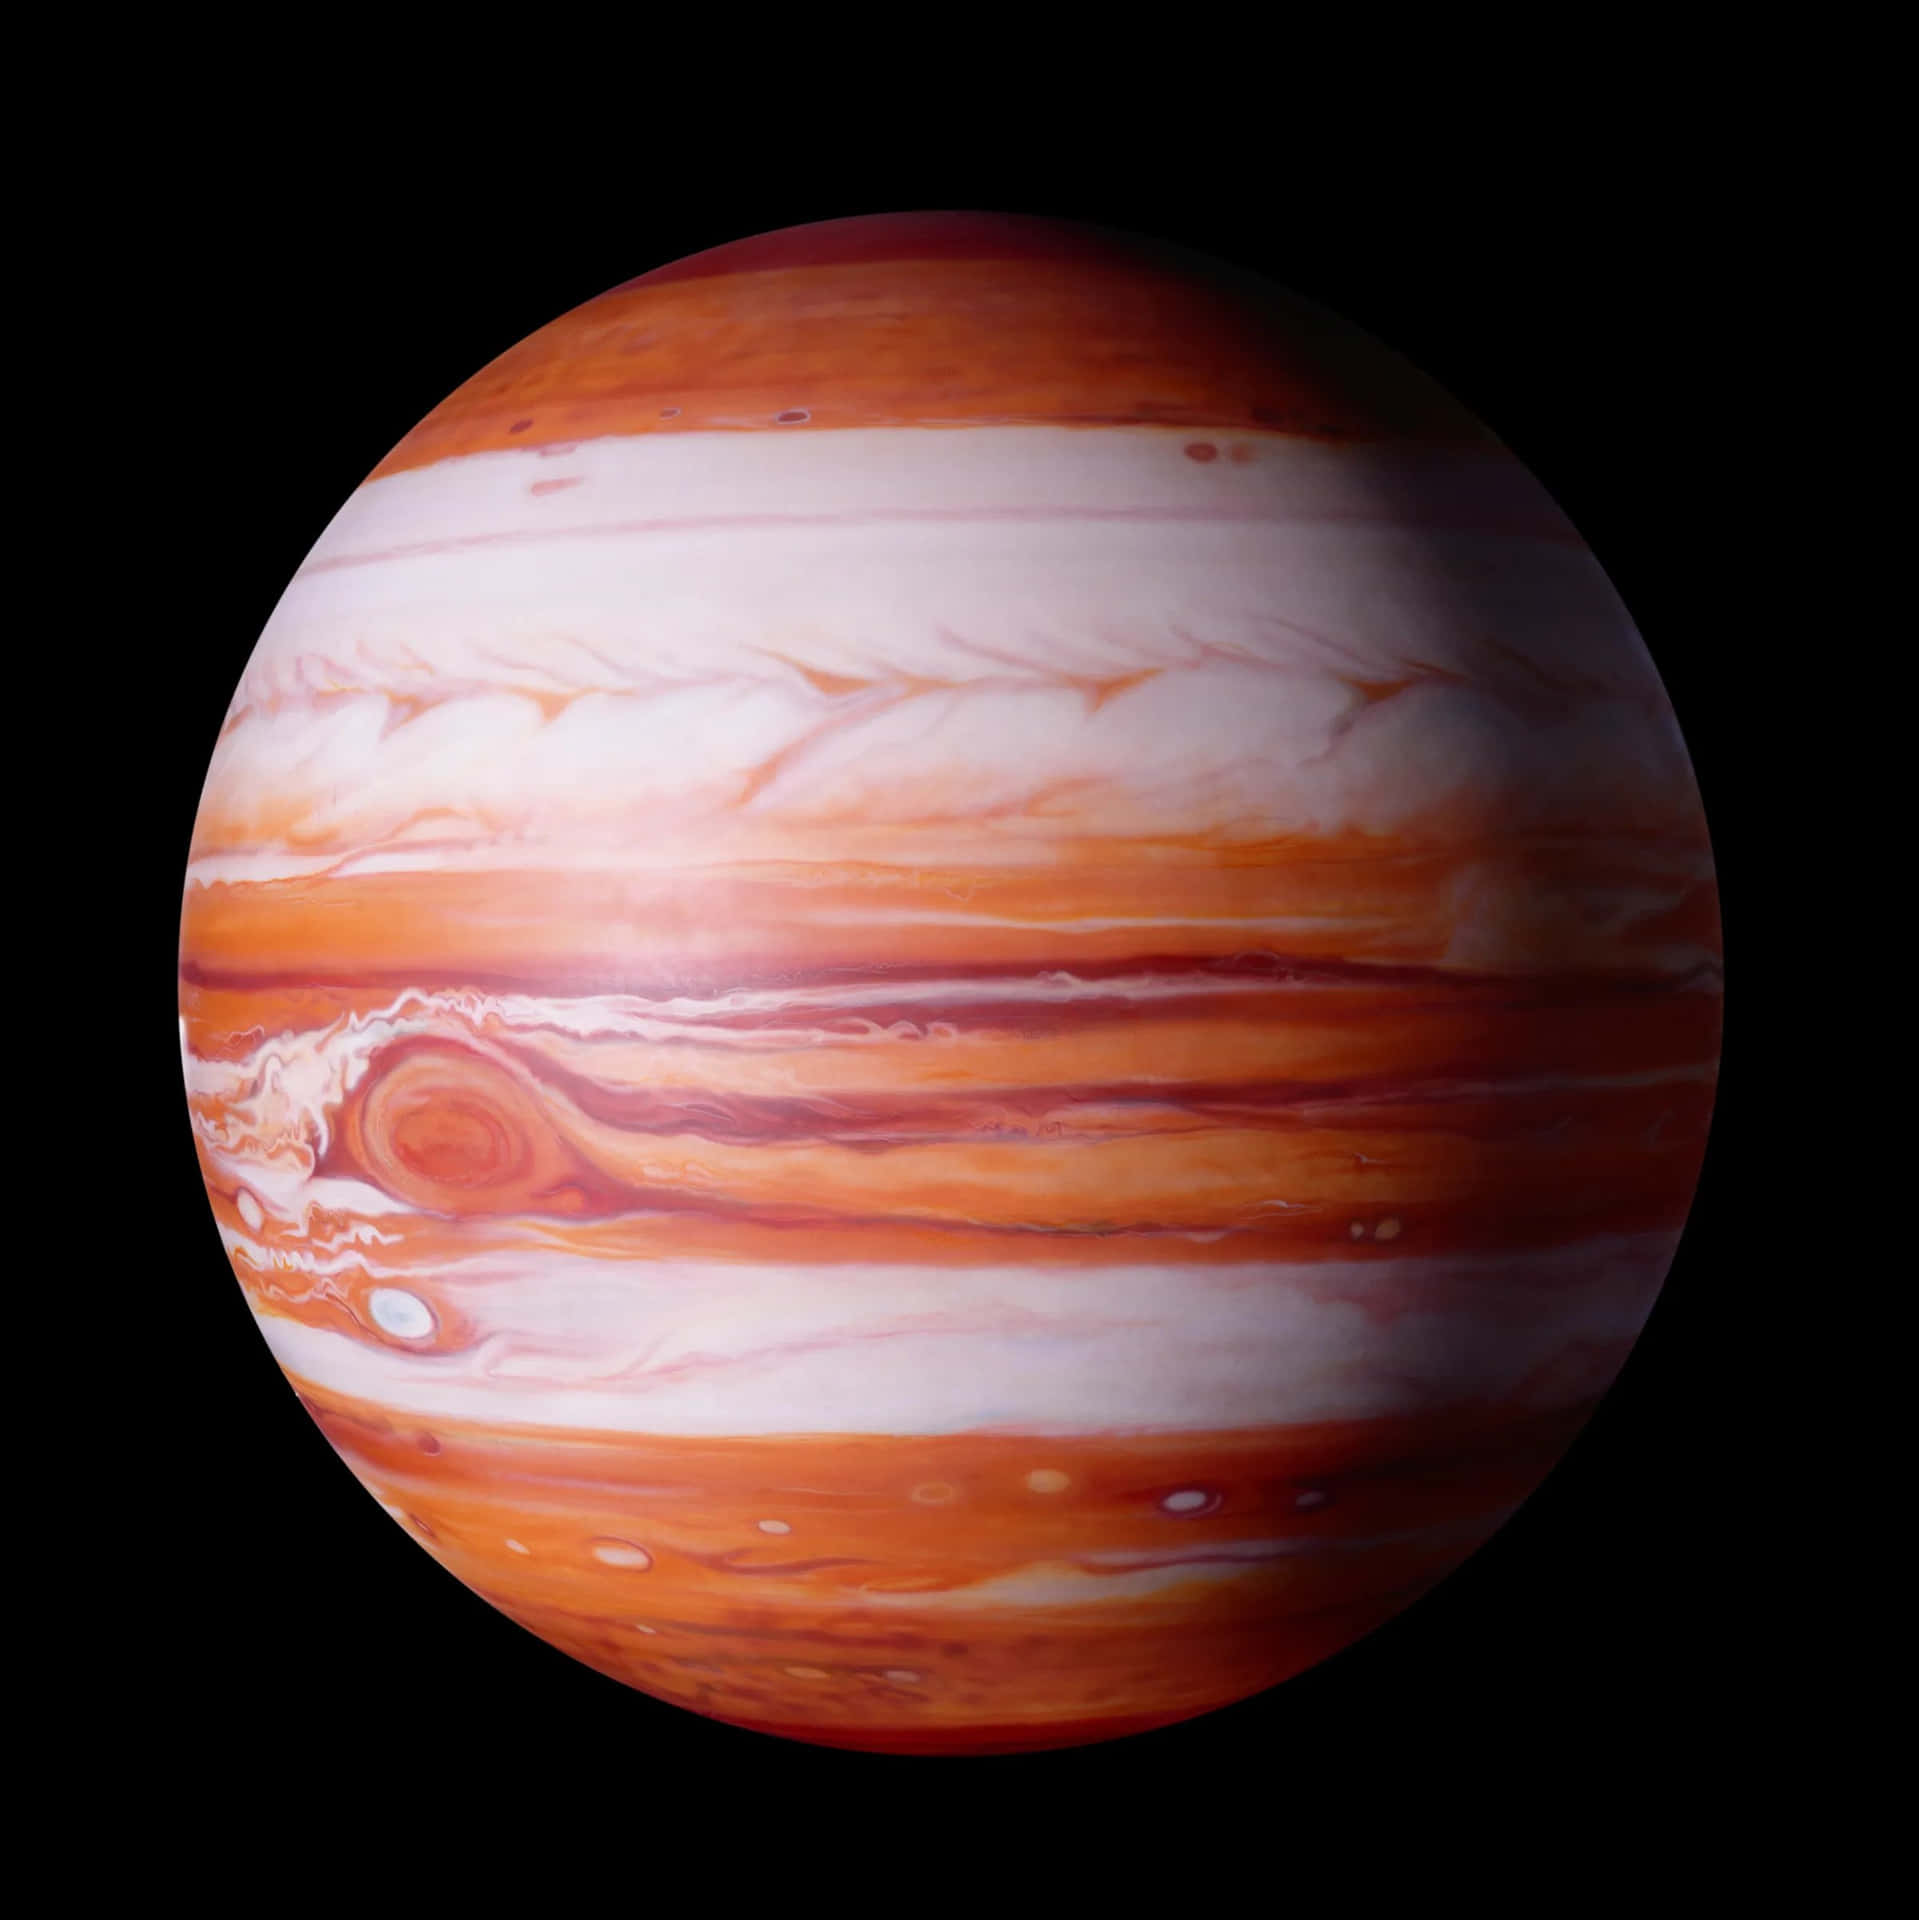 The grandeur of Jupiter